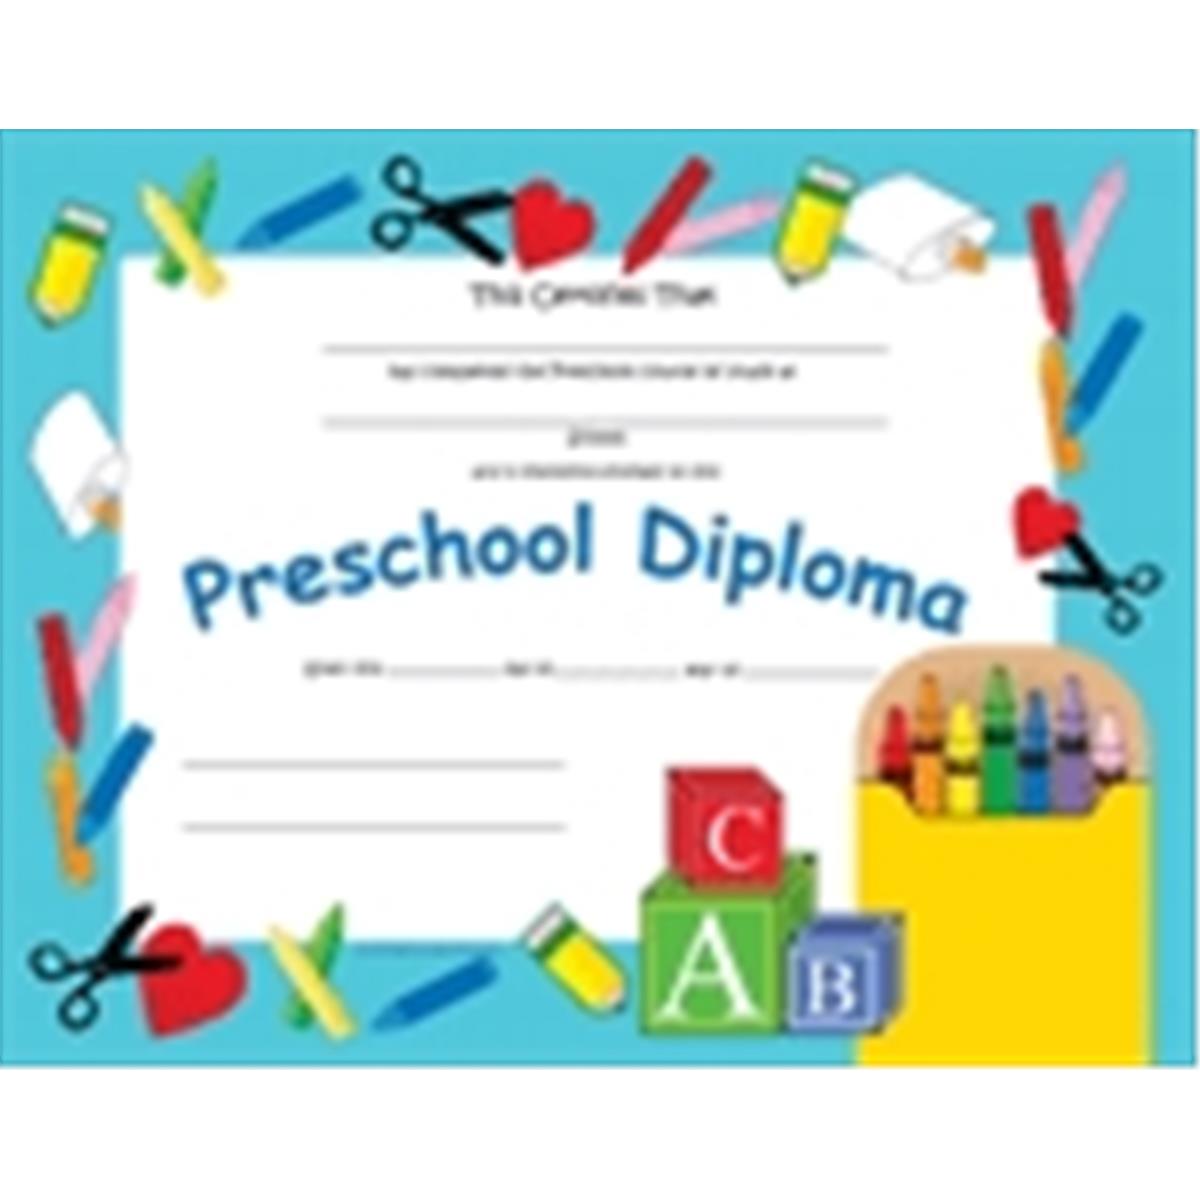 Se-3210 8.5 X 11 In. Preschool Diploma Certificate - 30 Sheets Per Pack